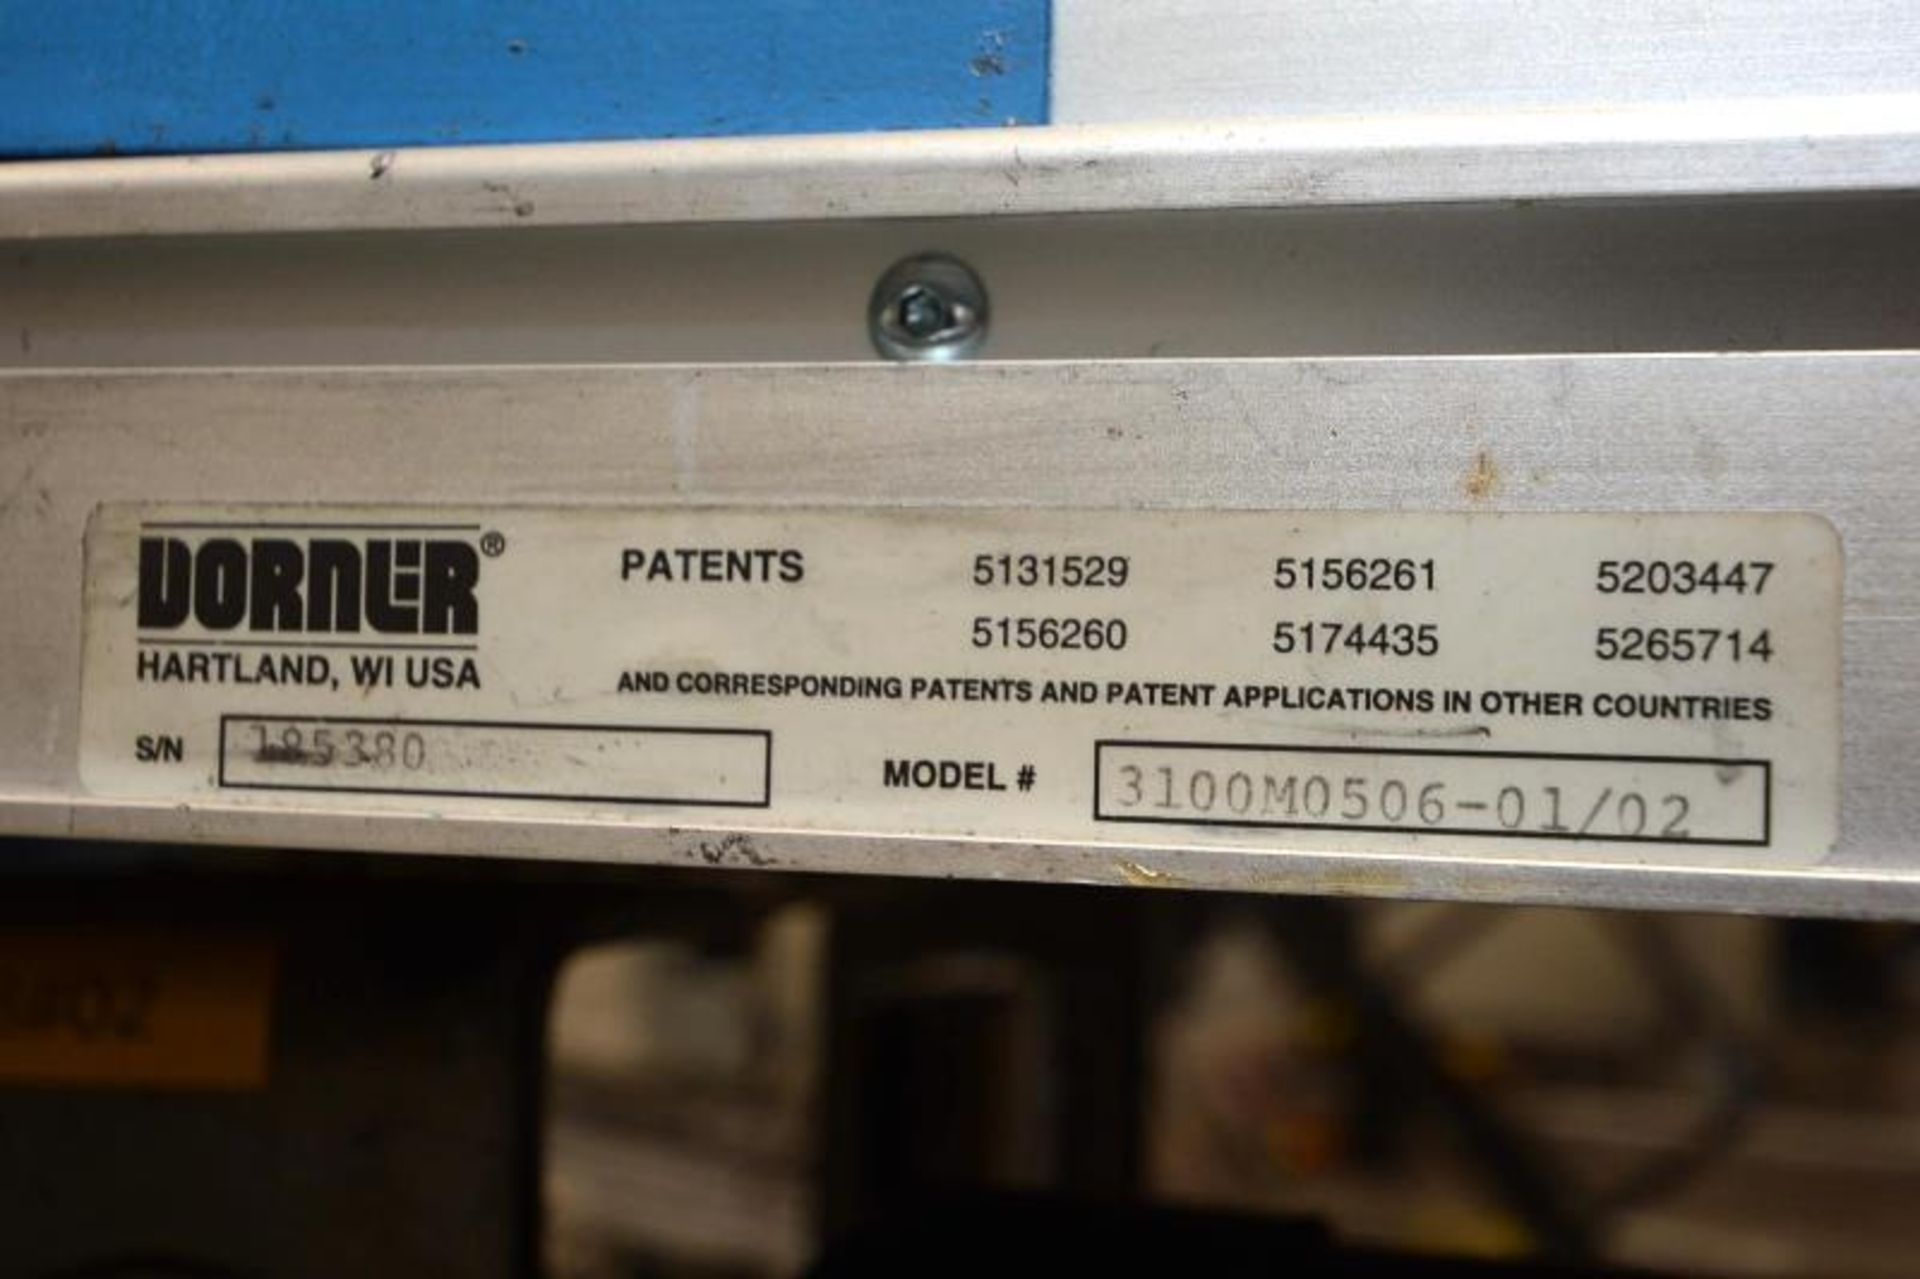 Conveyor, Conveyor double. Brand: Dorner. Model: 3100. Year: N/A. Serial Number: 185380. Possible - Image 13 of 17